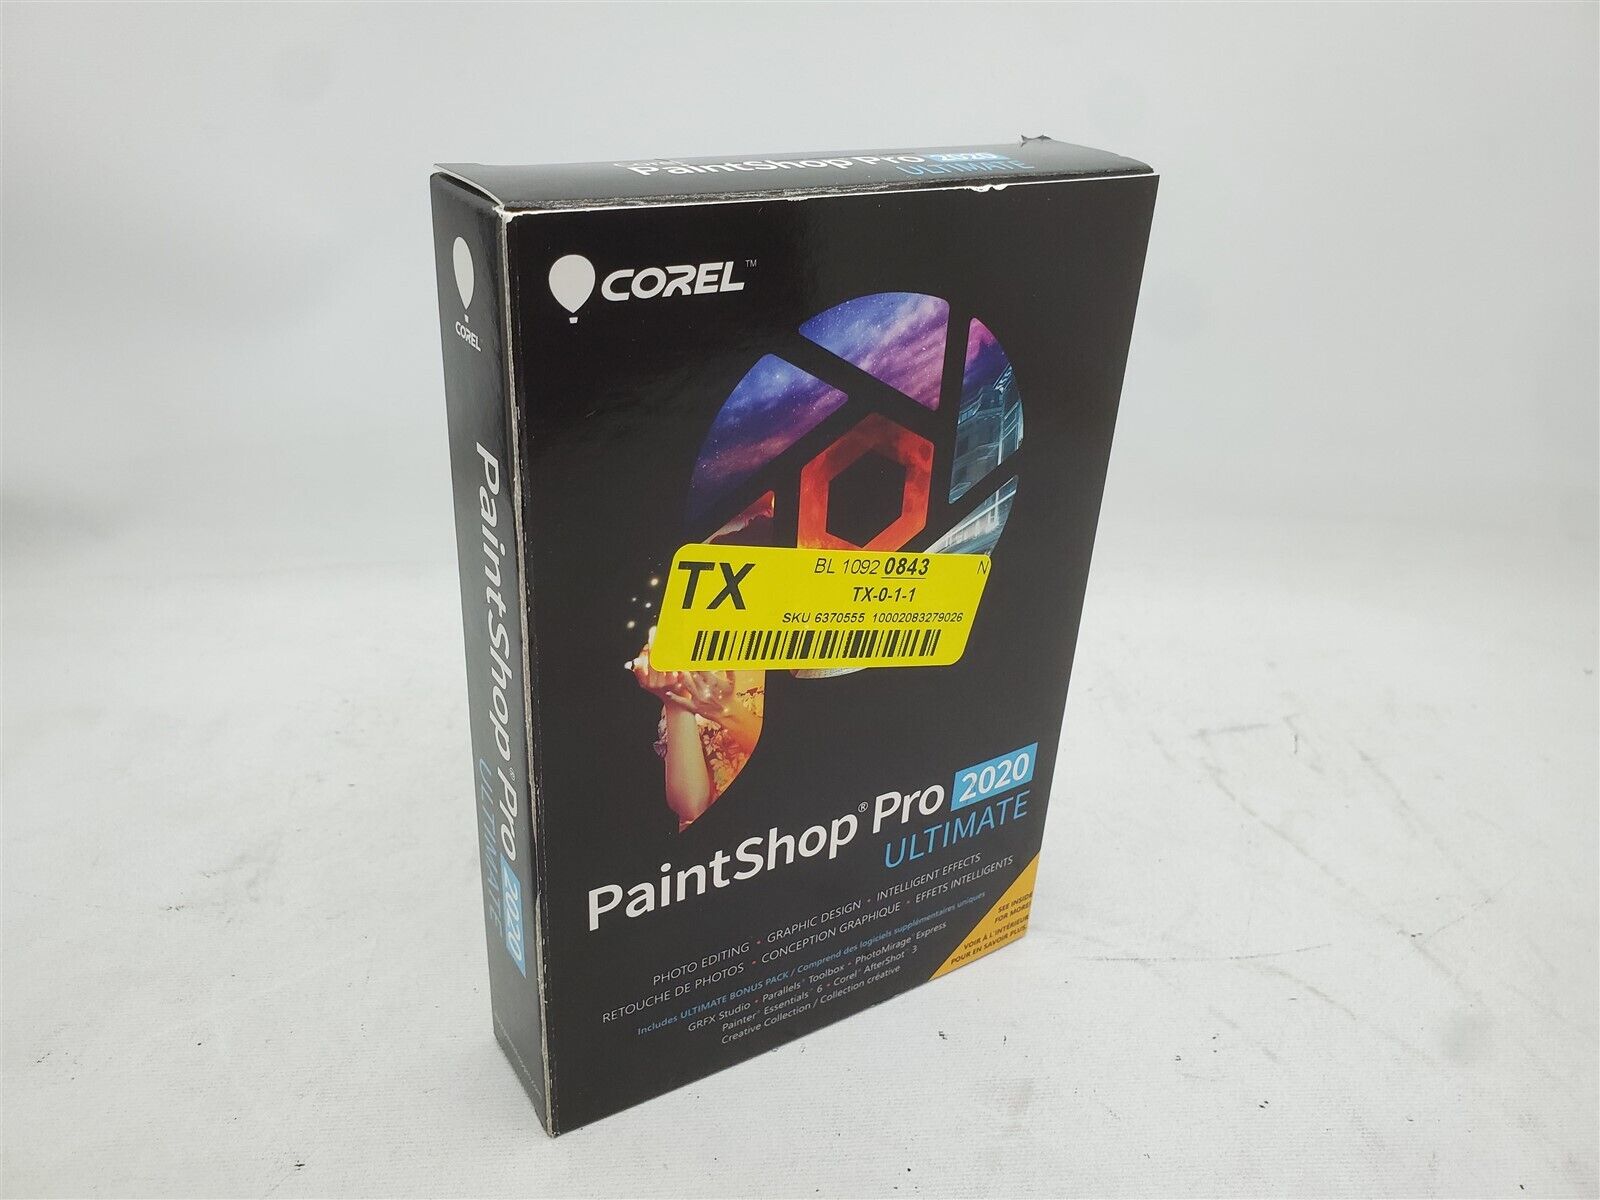 Corel PaintShop Pro Ultimate 2020 DVD Photo Editing & Graphic Design Software